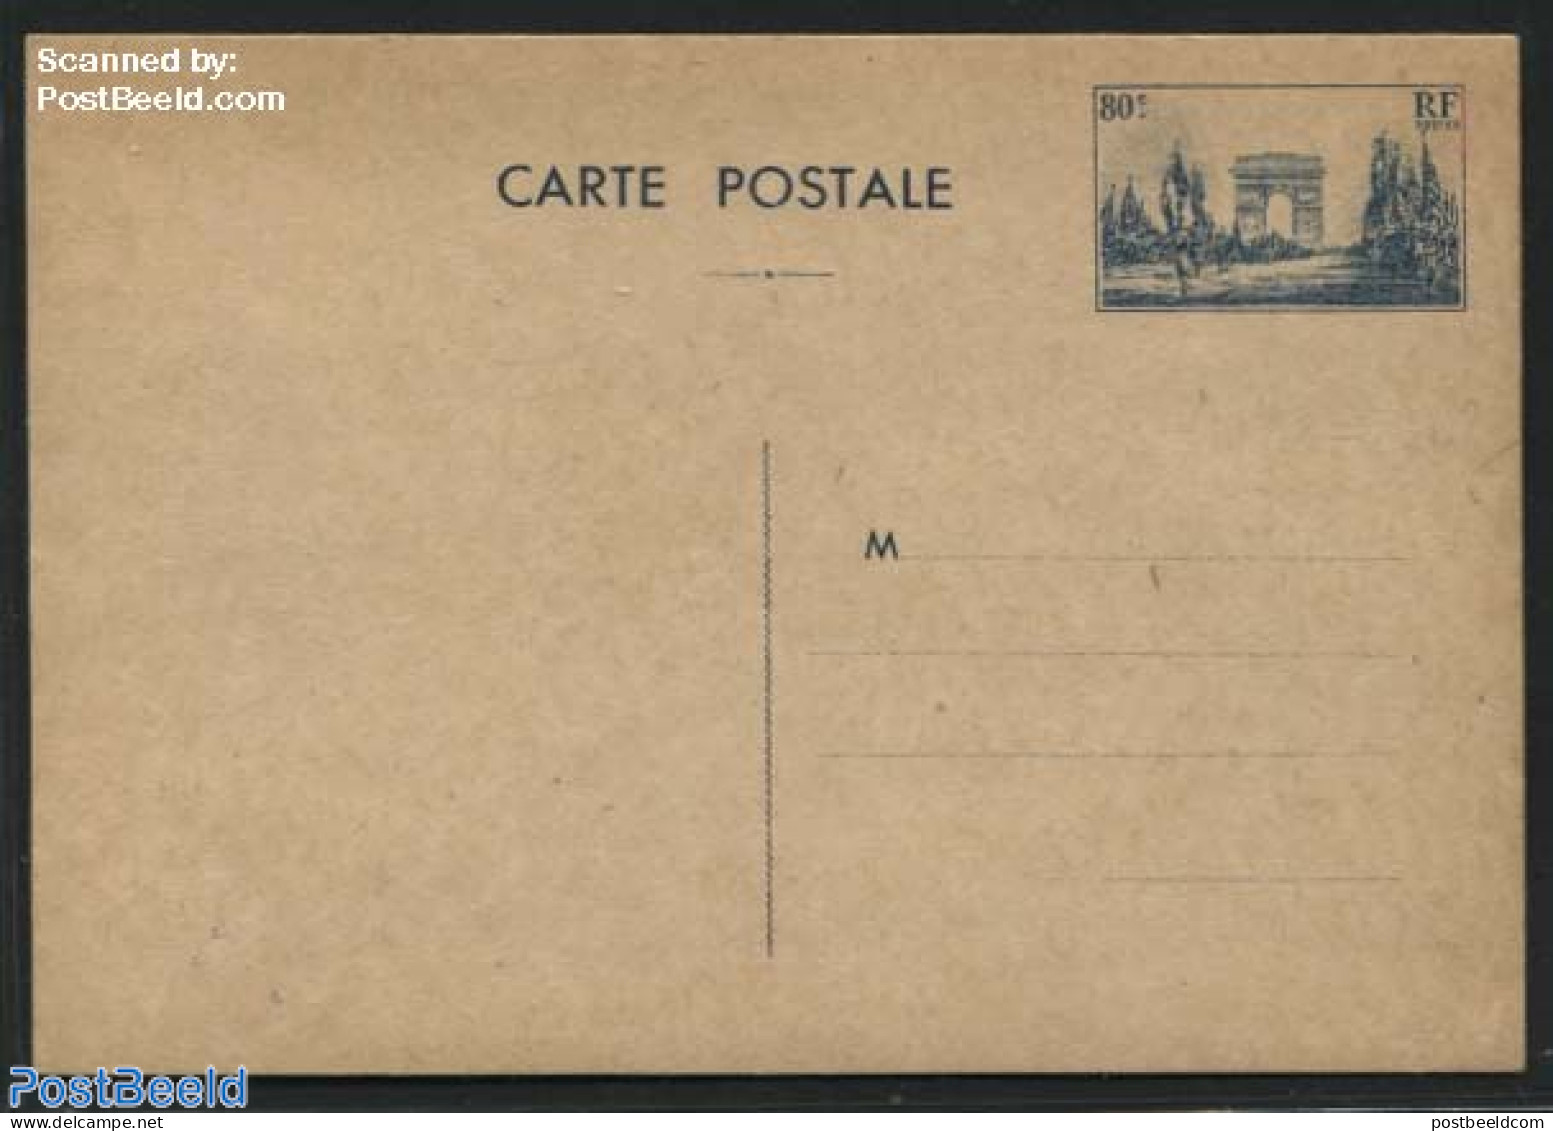 France 1940 Postcard Arc De Triomphe 80c Blue, Unused Postal Stationary - Covers & Documents